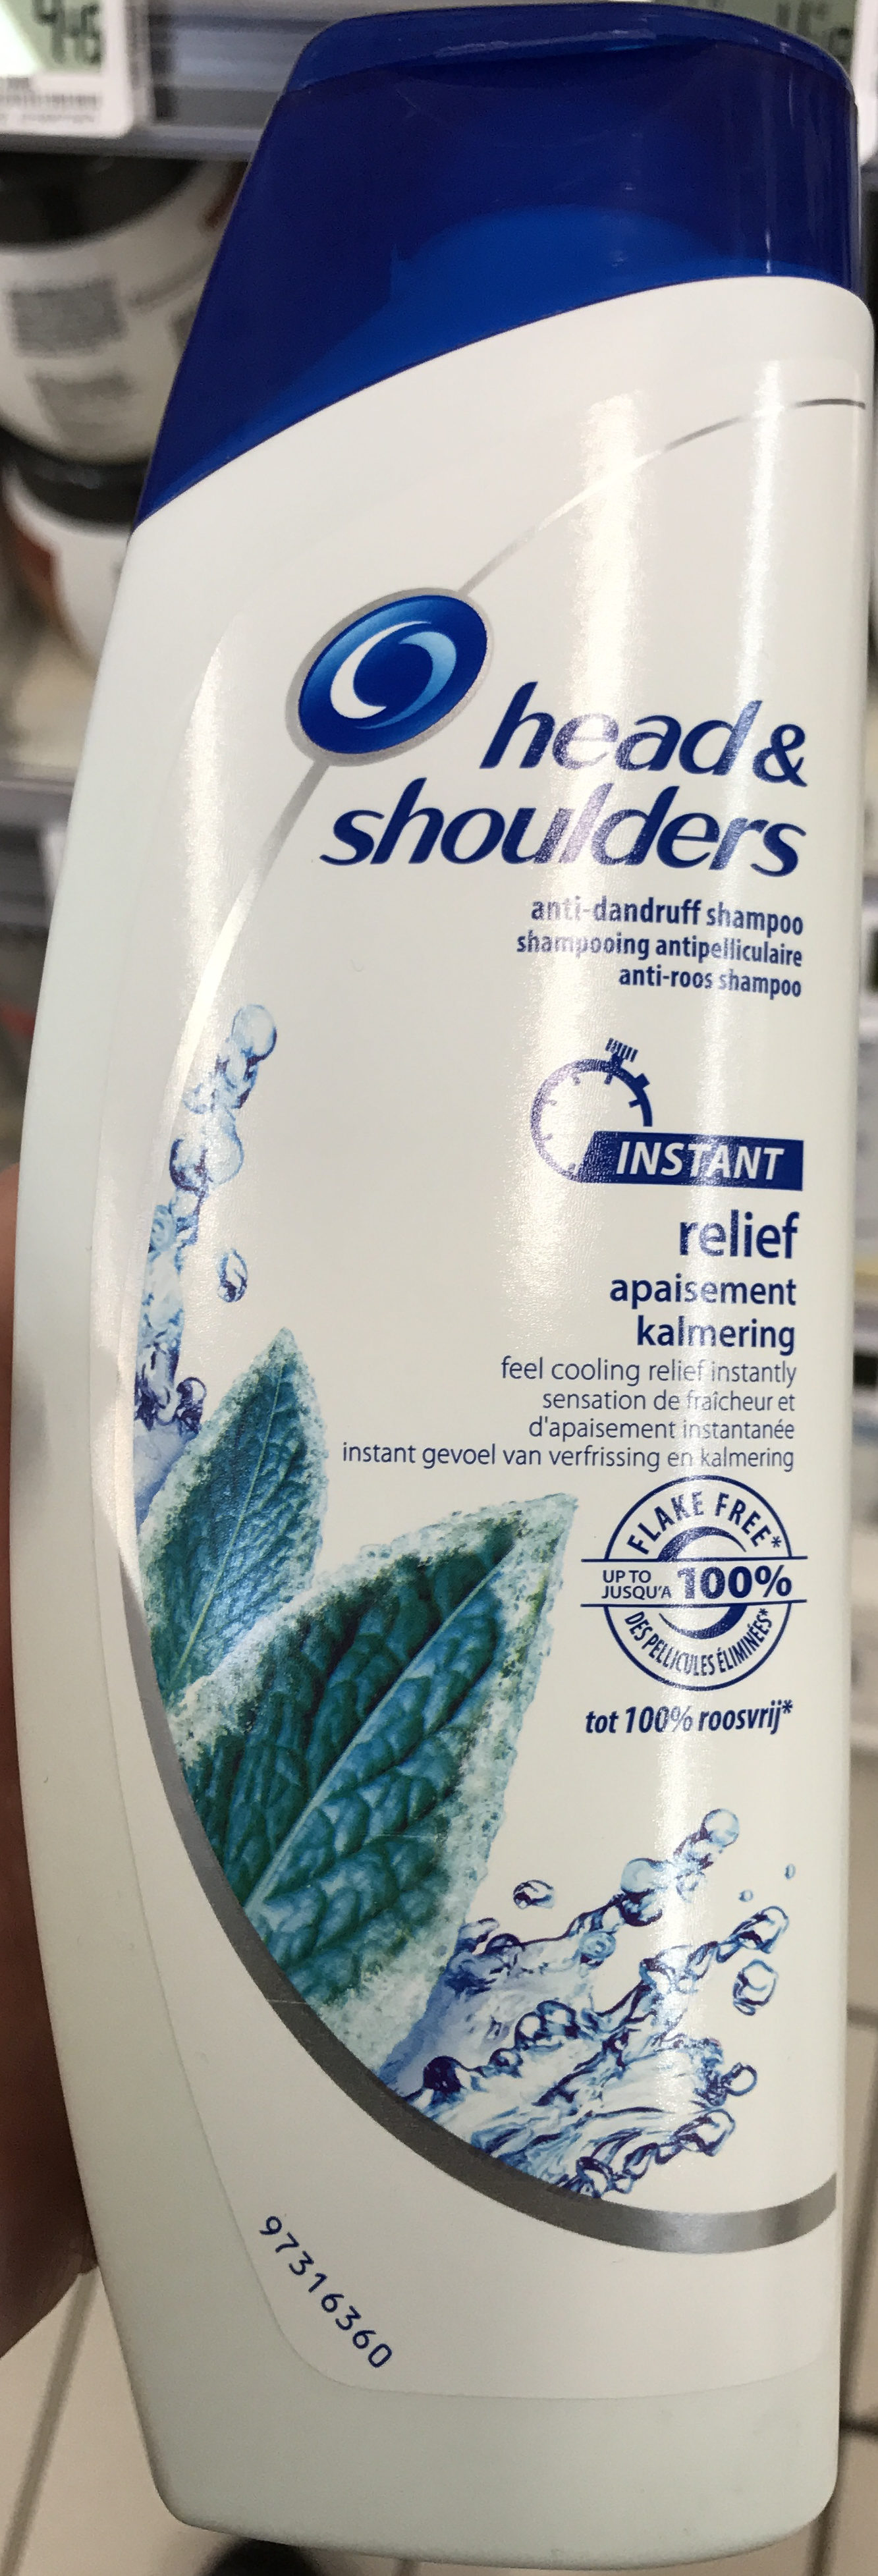 Shampooing antipelliculaire Instant Relief Apaisement - Produto - fr